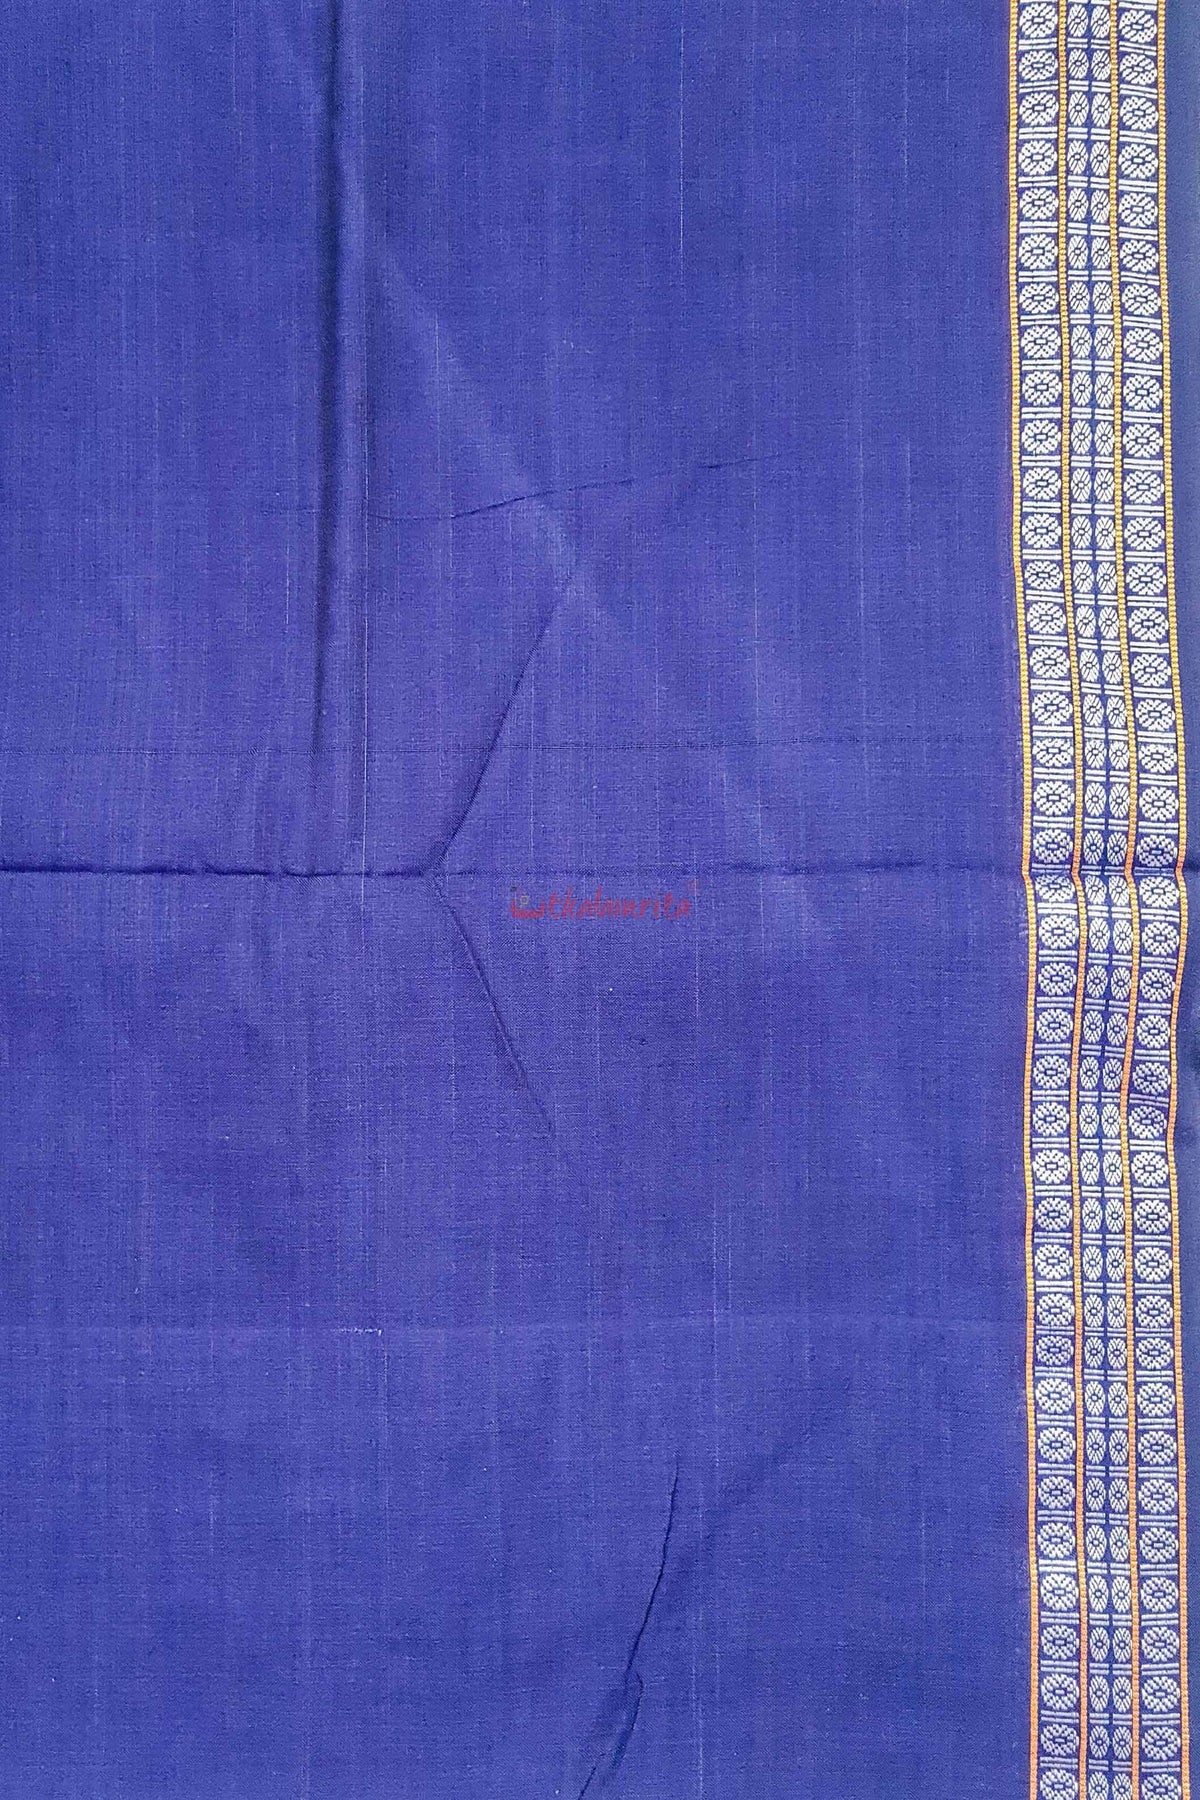 Blue Rudraksha Border (Fabric)